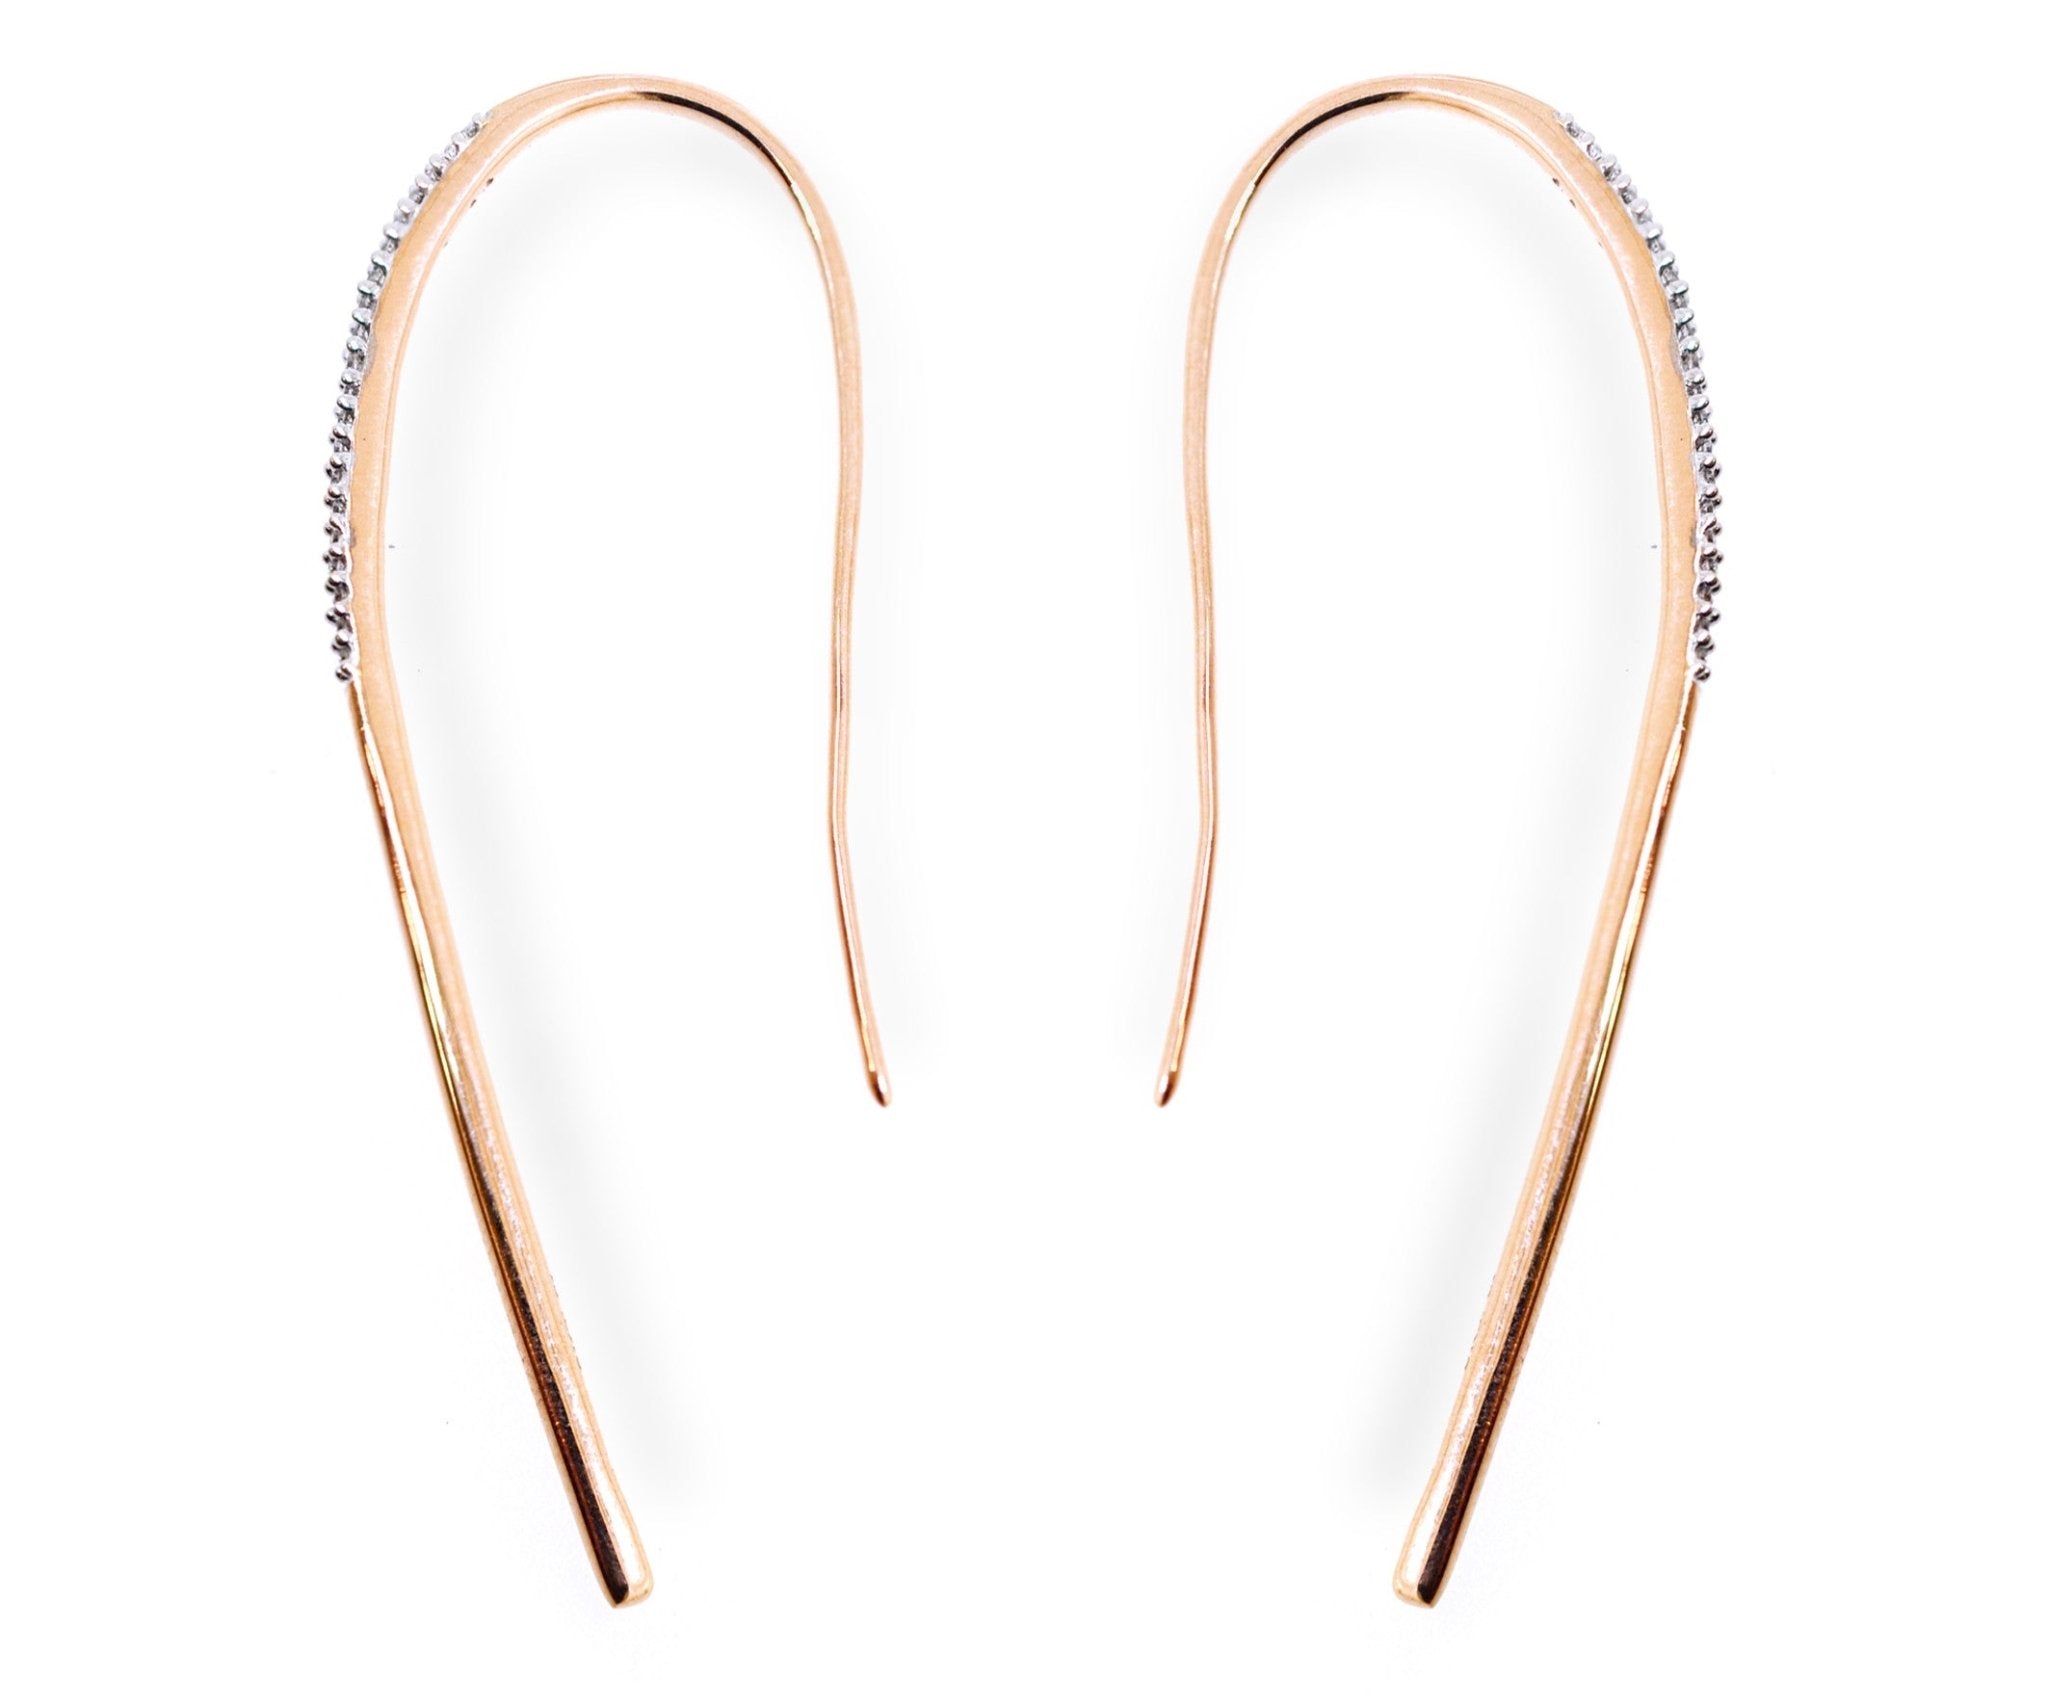 9ct Rose gold shepperd hook earrings with diamonds - ForeverJewels Design Studio 8